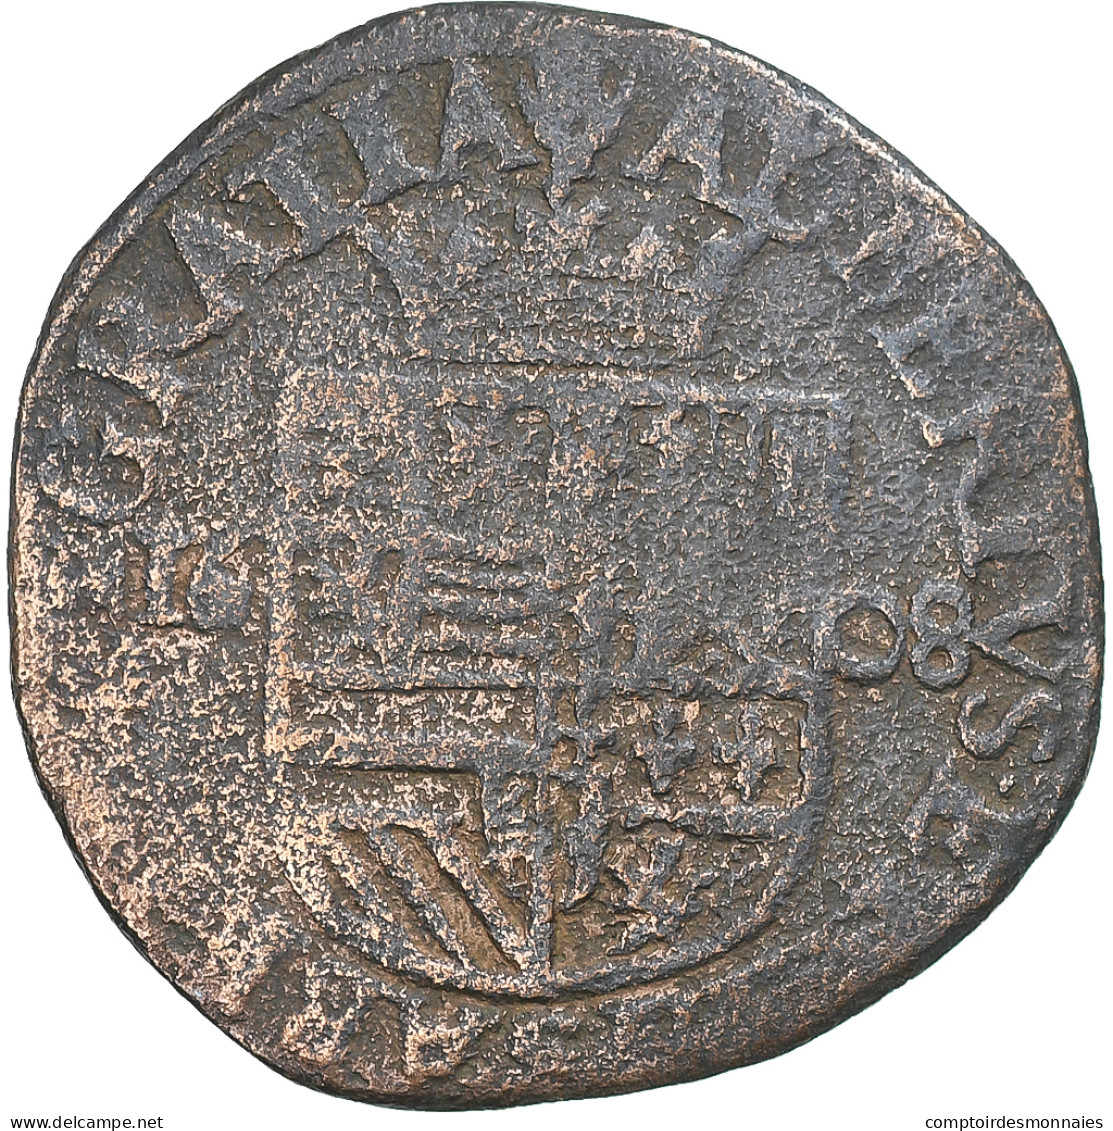 Pays-Bas Espagnols, Albert & Isabelle, Liard, 1608, Anvers, TB, Cuivre - Spanische Niederlande